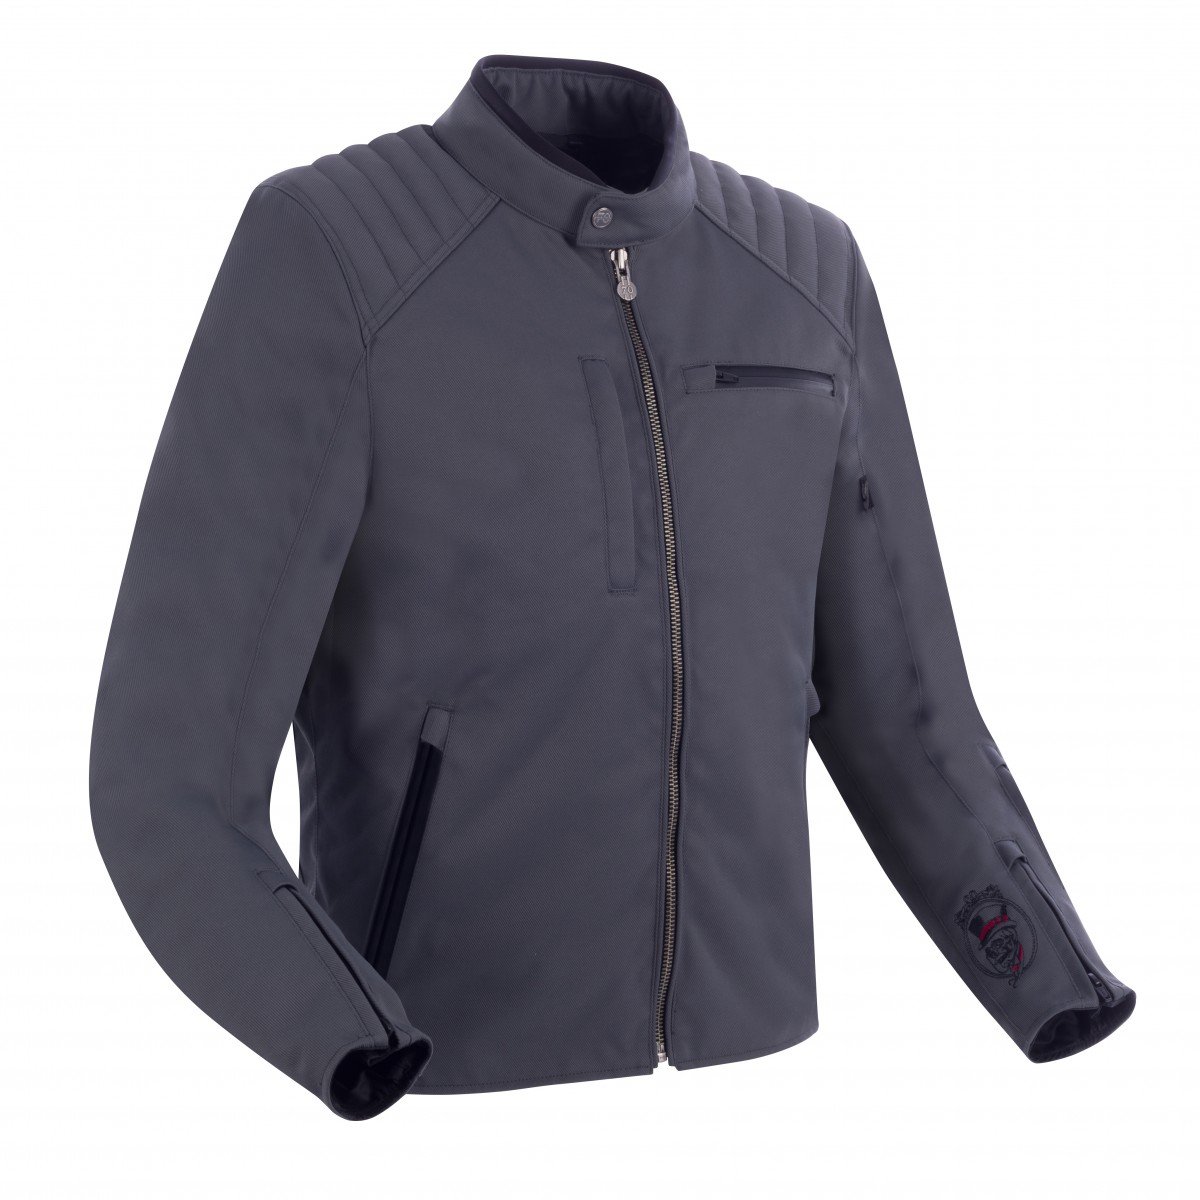 Image of Segura Eternal Jacket Gray Size 2XL ID 3660815168660